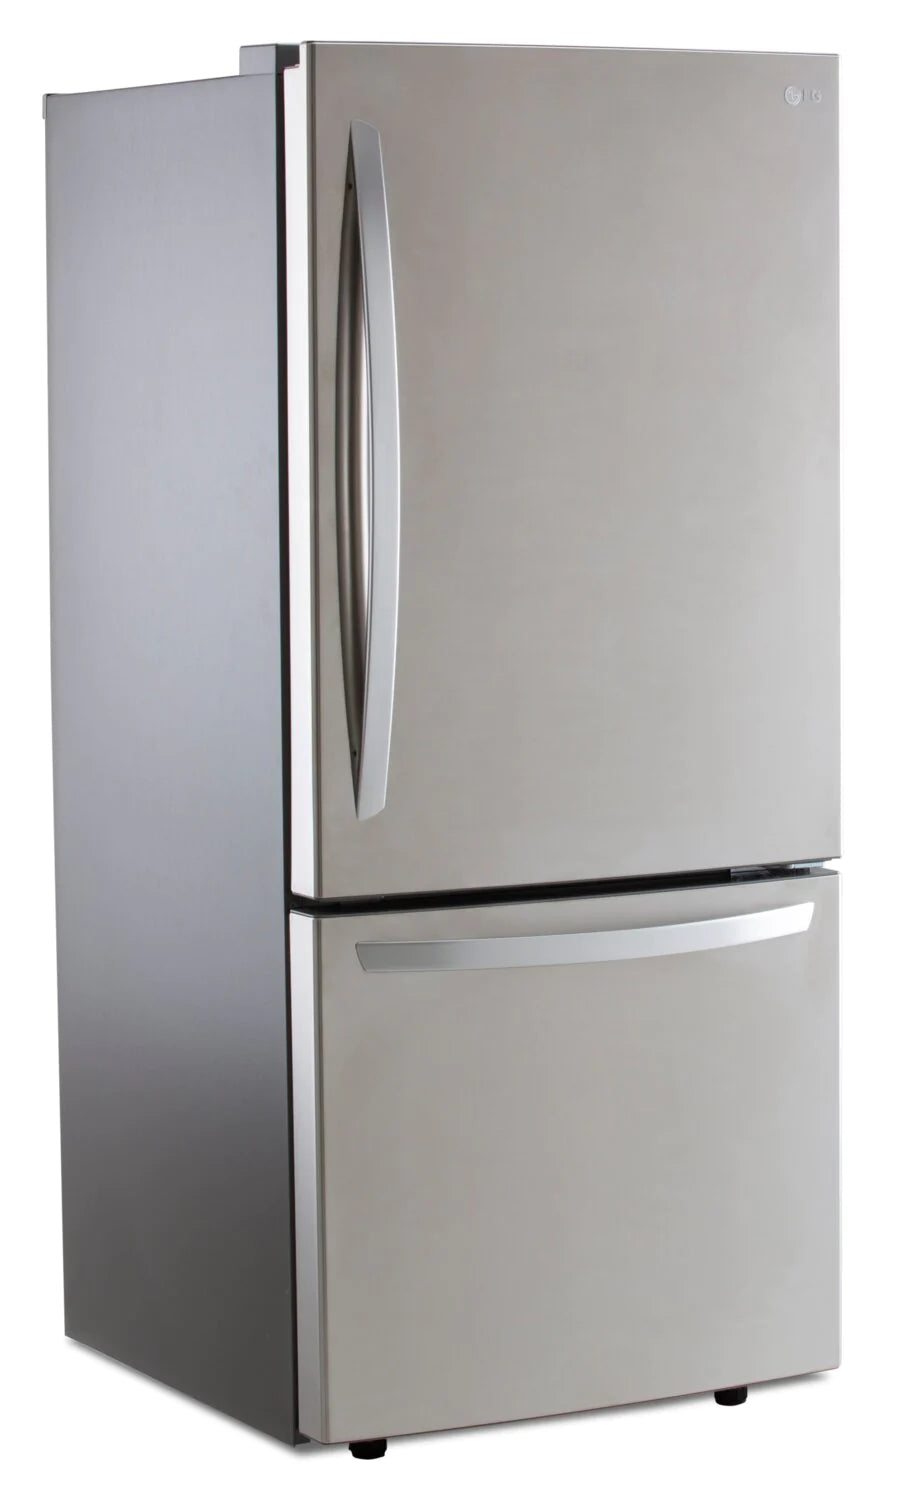 LG Refrigerator 30" Stainless steel LRDNS2200S